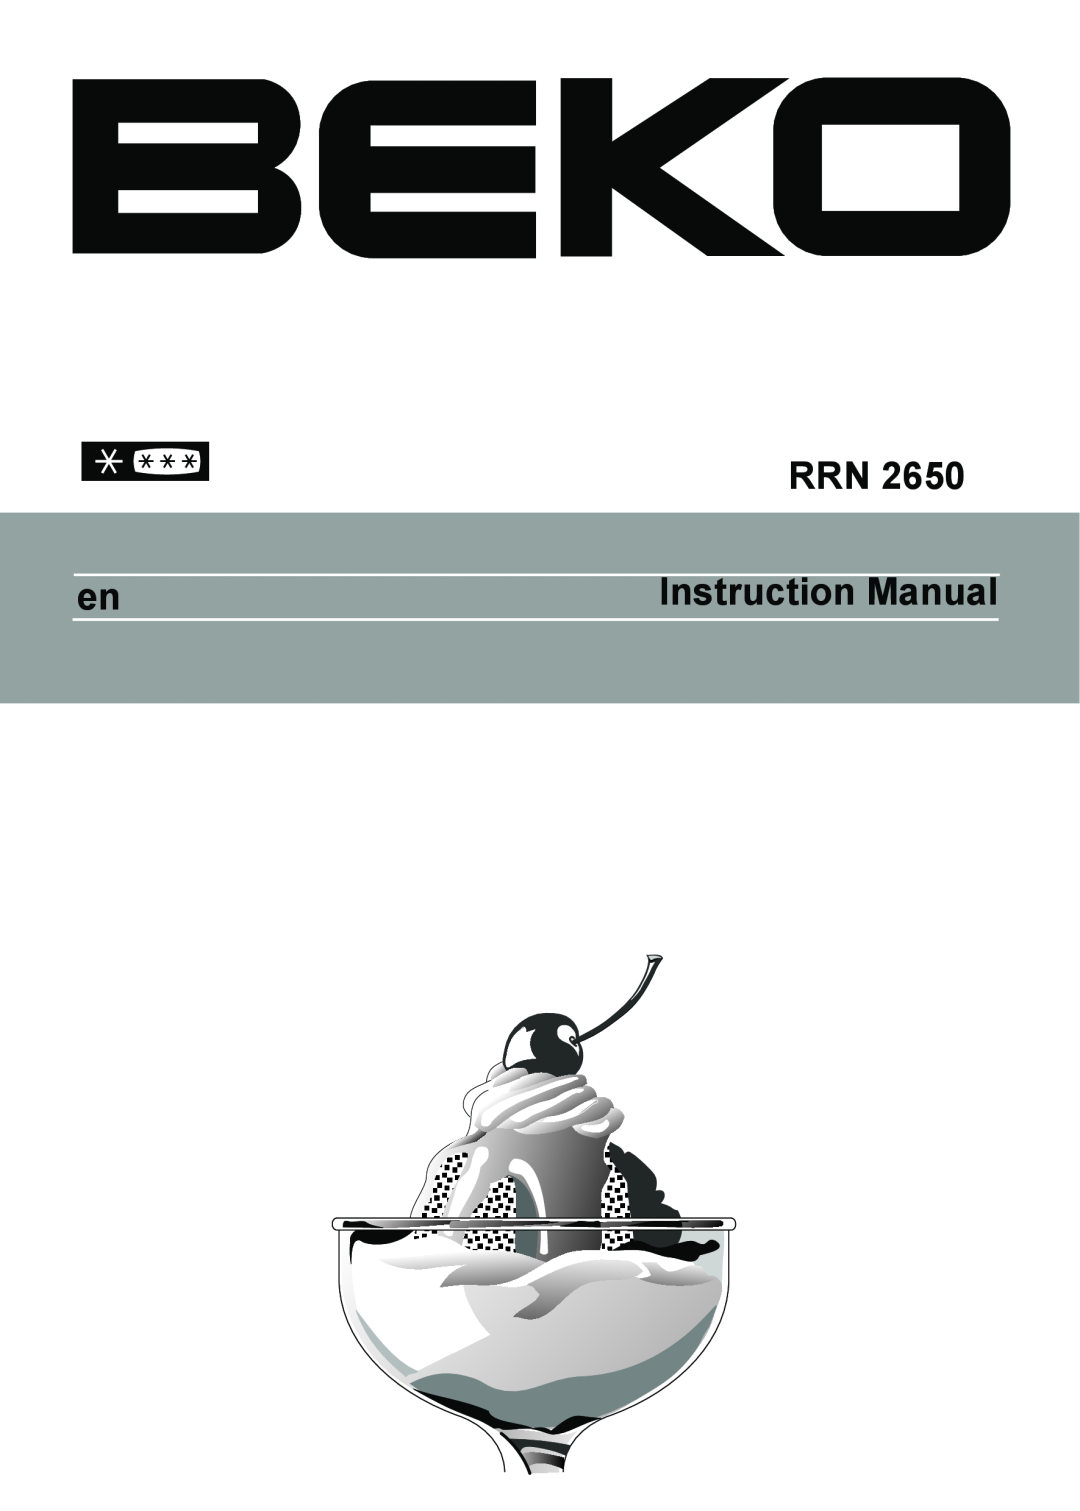 Beko RRN 2650, Refrigerator instruction manual Instruction Manual 